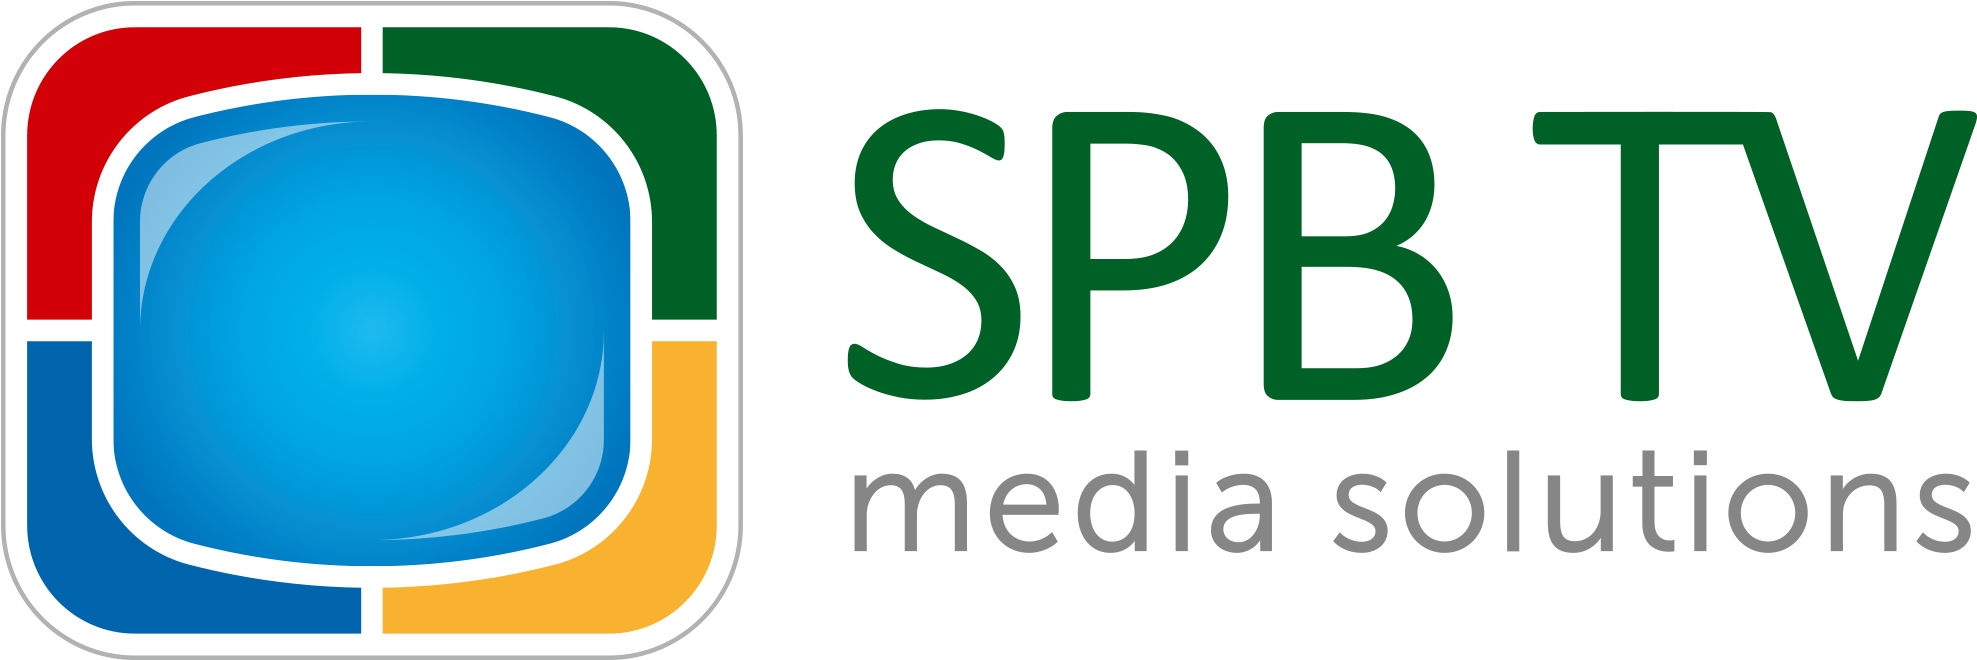 Download Spb Tv Logo - Spb Tv PNG Image with No Background - PNGkey.com